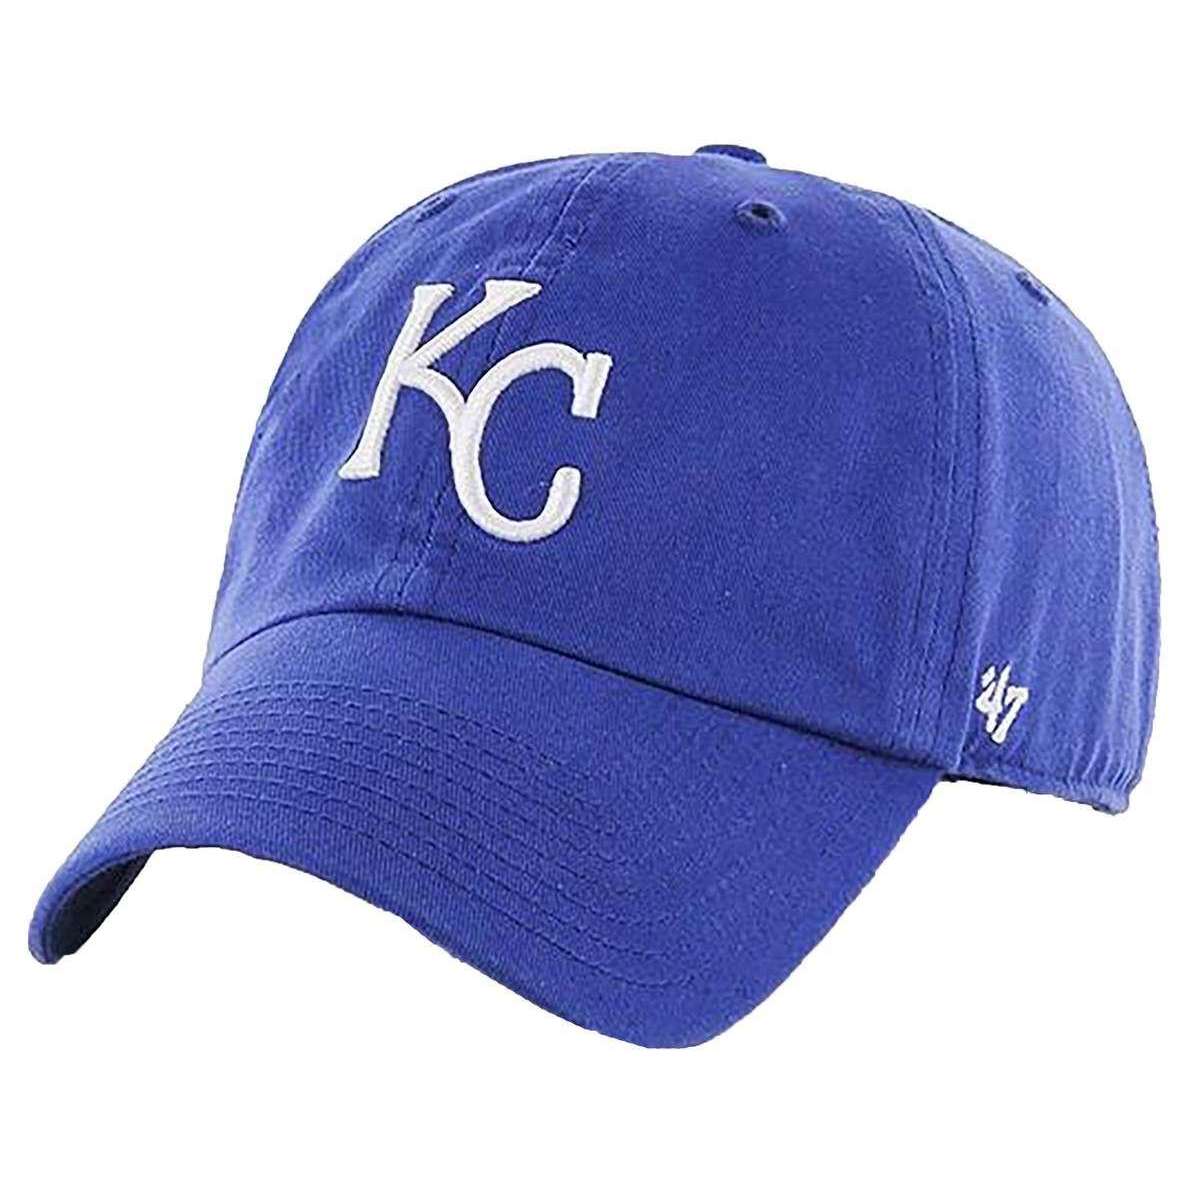 MLB Men's Hat - Blue